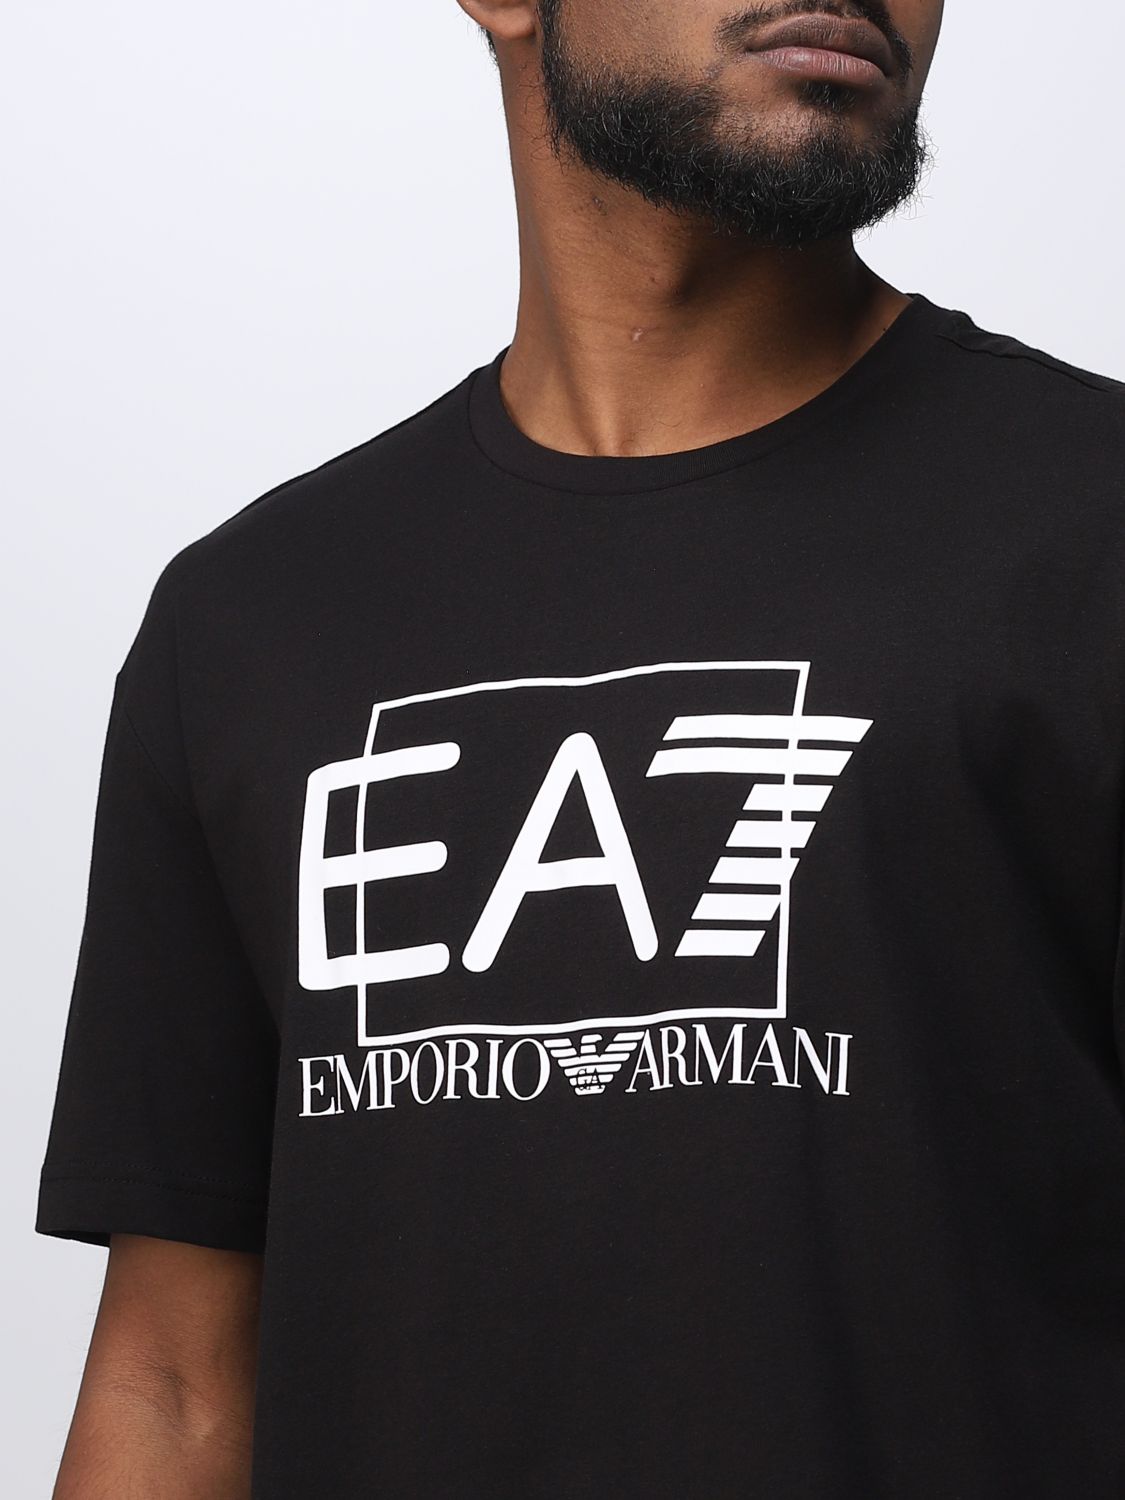 hart Tegenstrijdigheid Auto EA7: t-shirt for man - Black | Ea7 t-shirt 3RPT09PJ02Z online on GIGLIO.COM